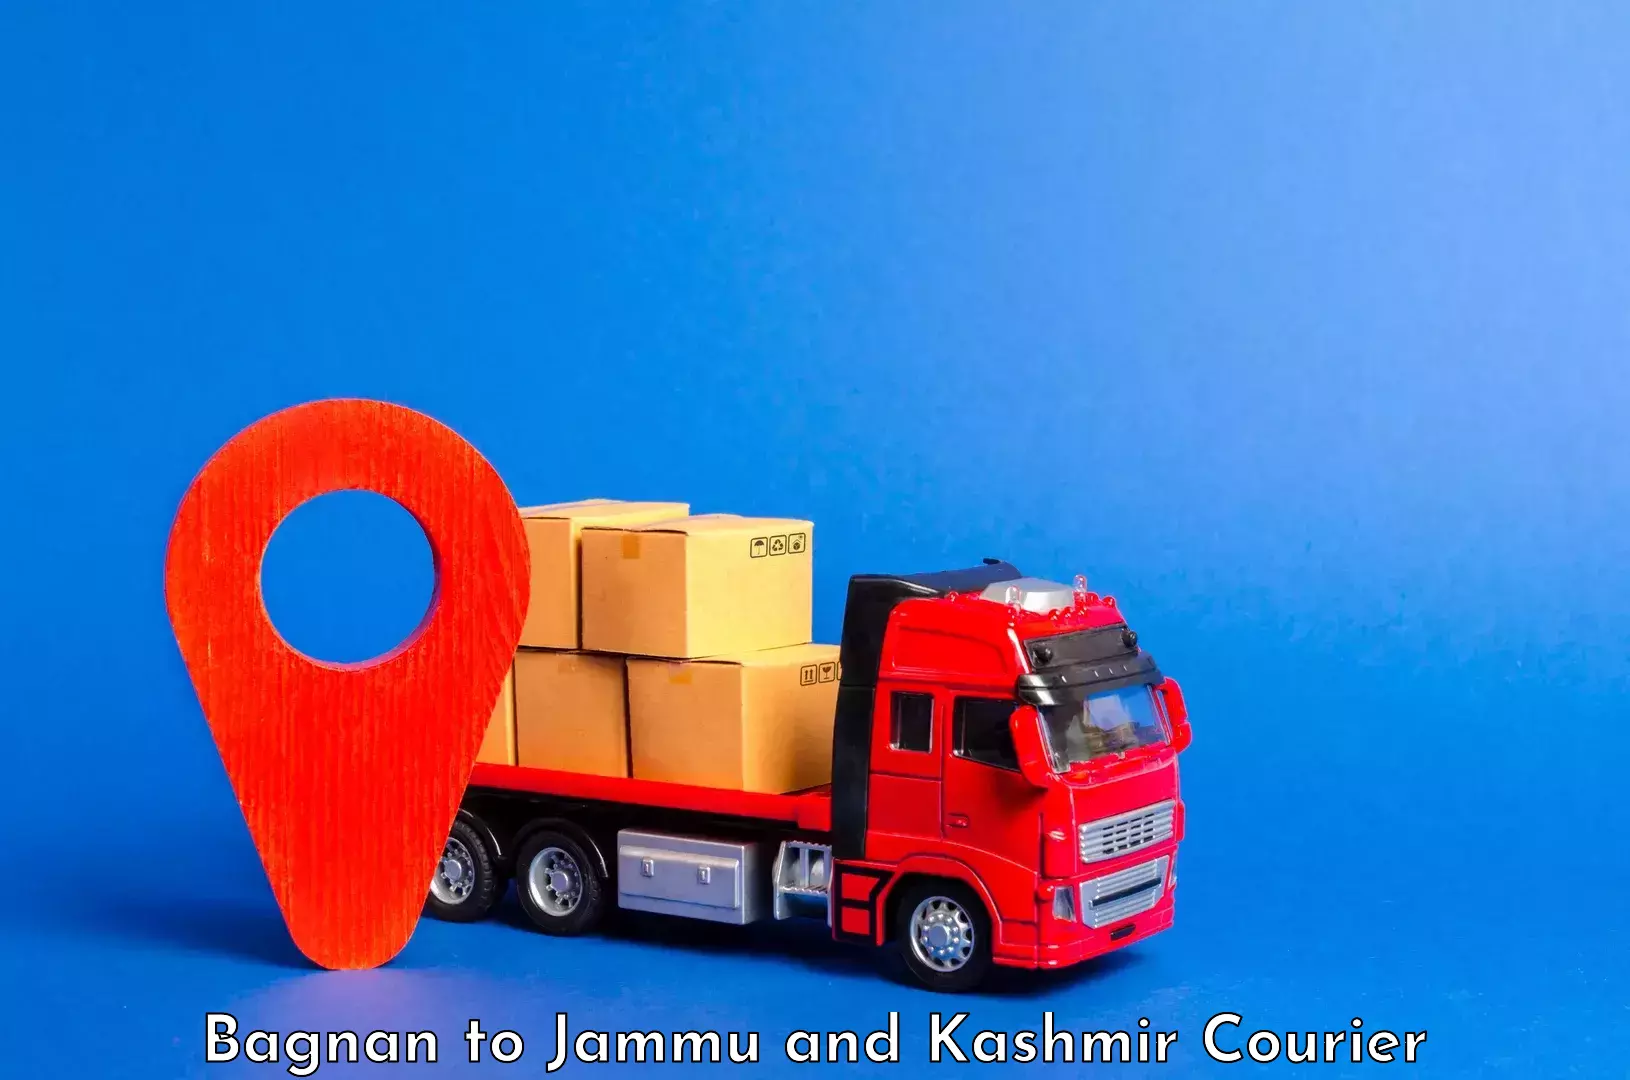 Baggage shipping advice Bagnan to Jammu and Kashmir